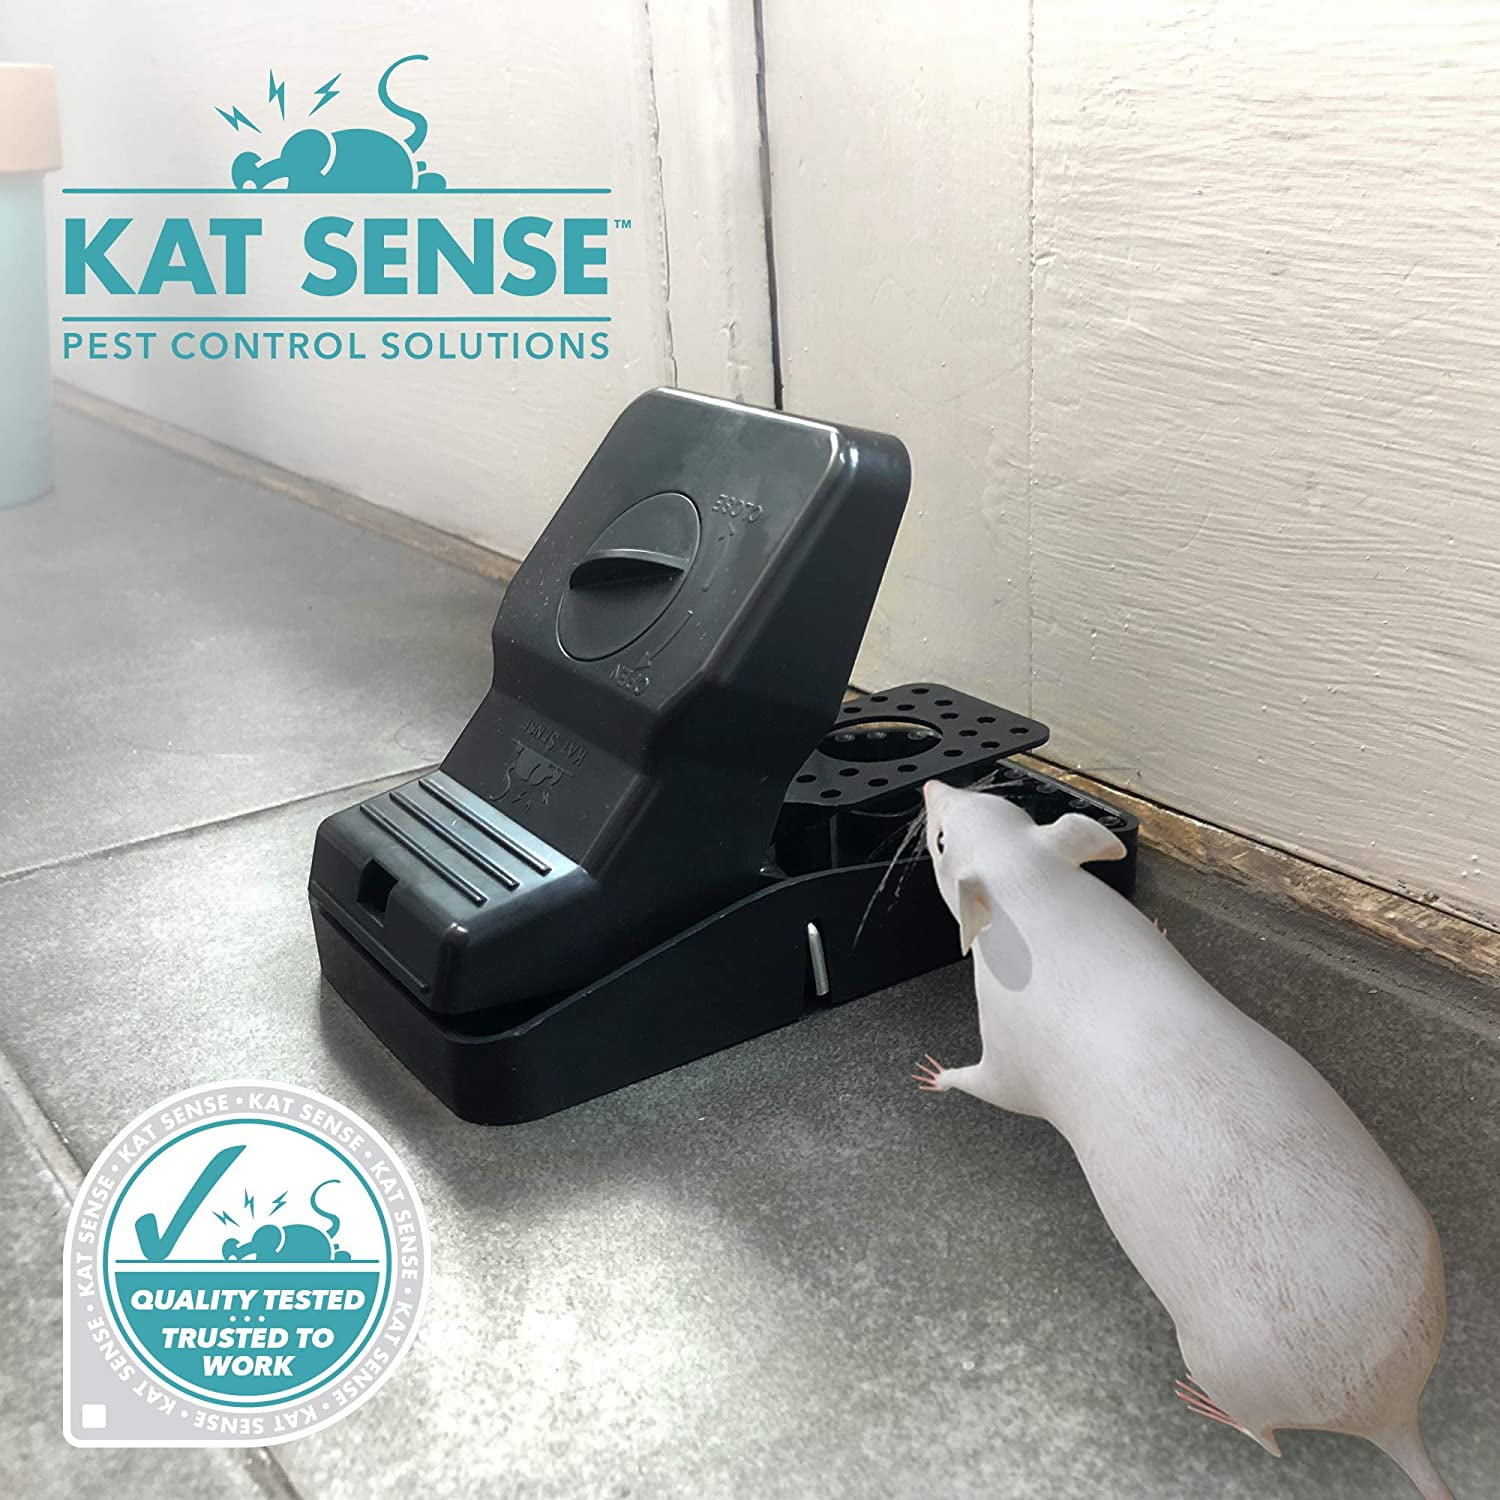 Kat Sense Rat Traps for Instant Kill Results, Set of 6 Lrg